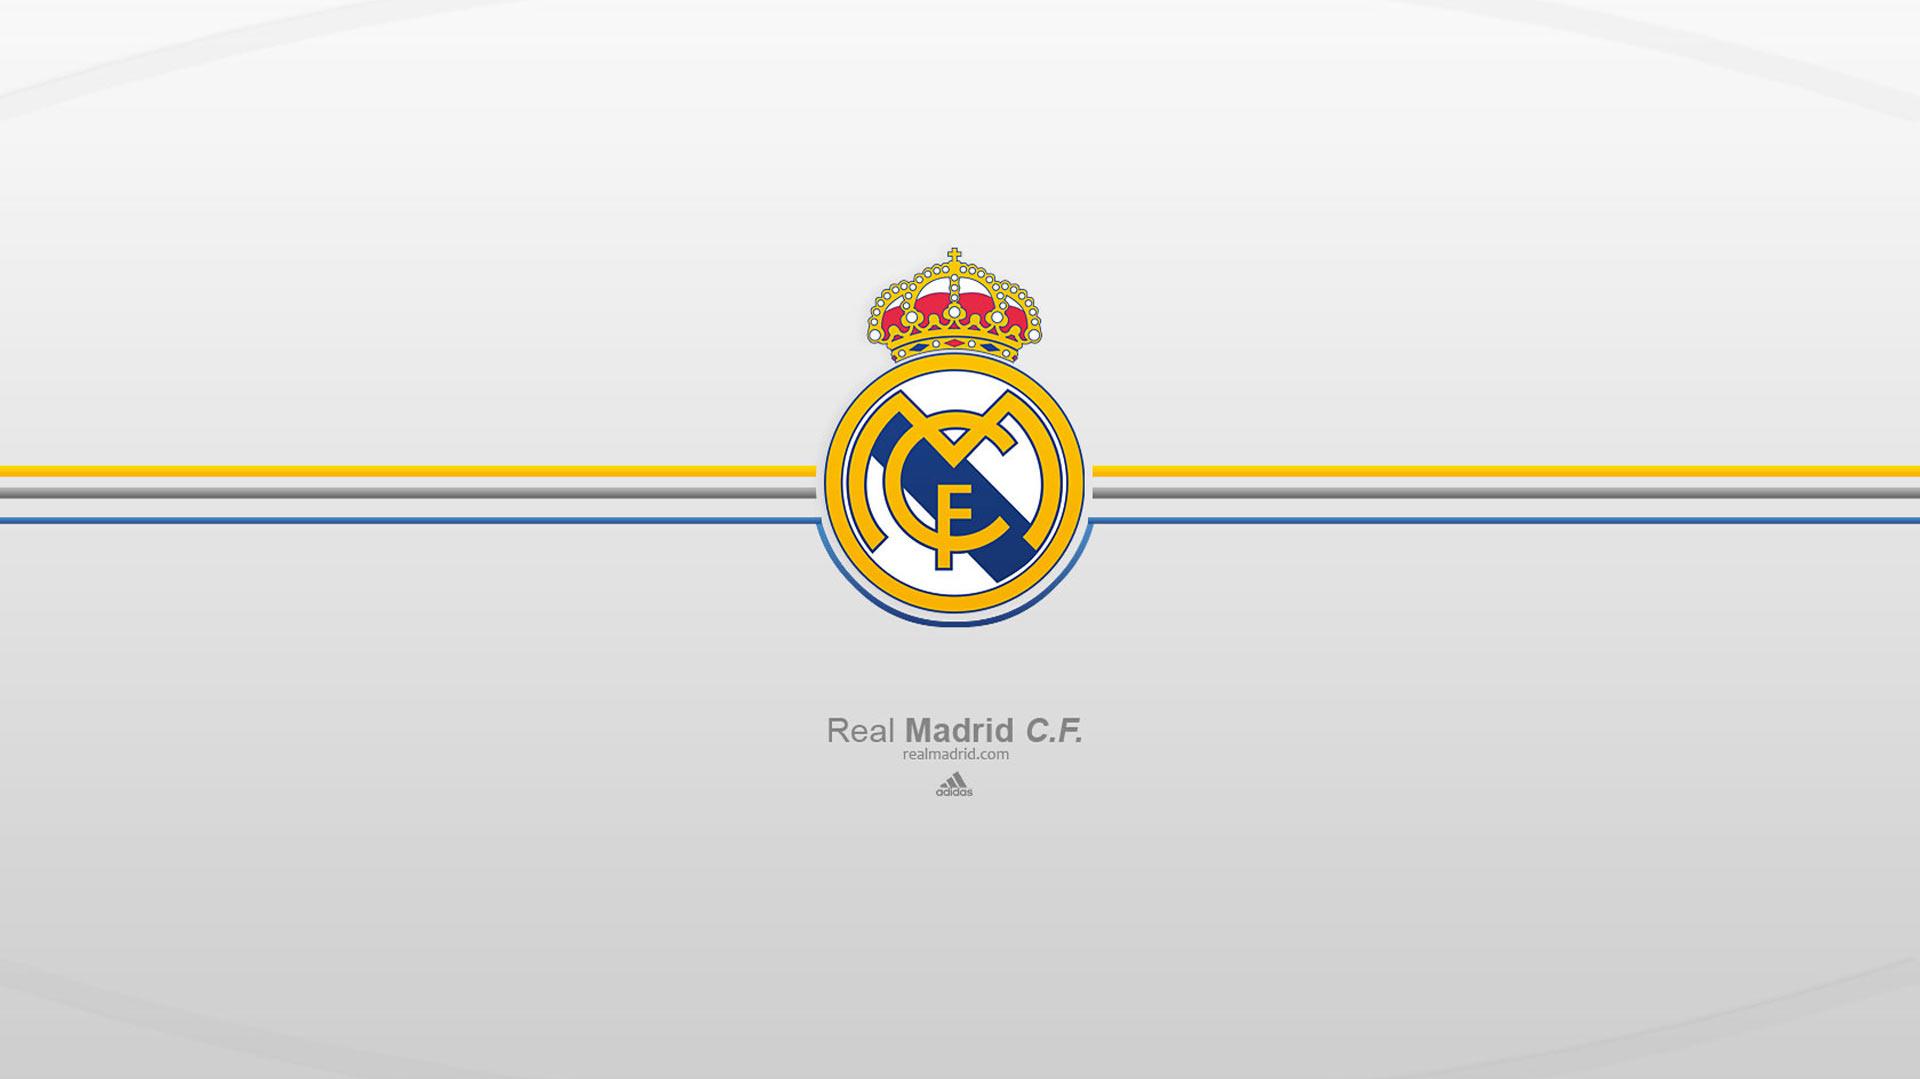 Real Madrid Cf High Definition Widescreen Desktop